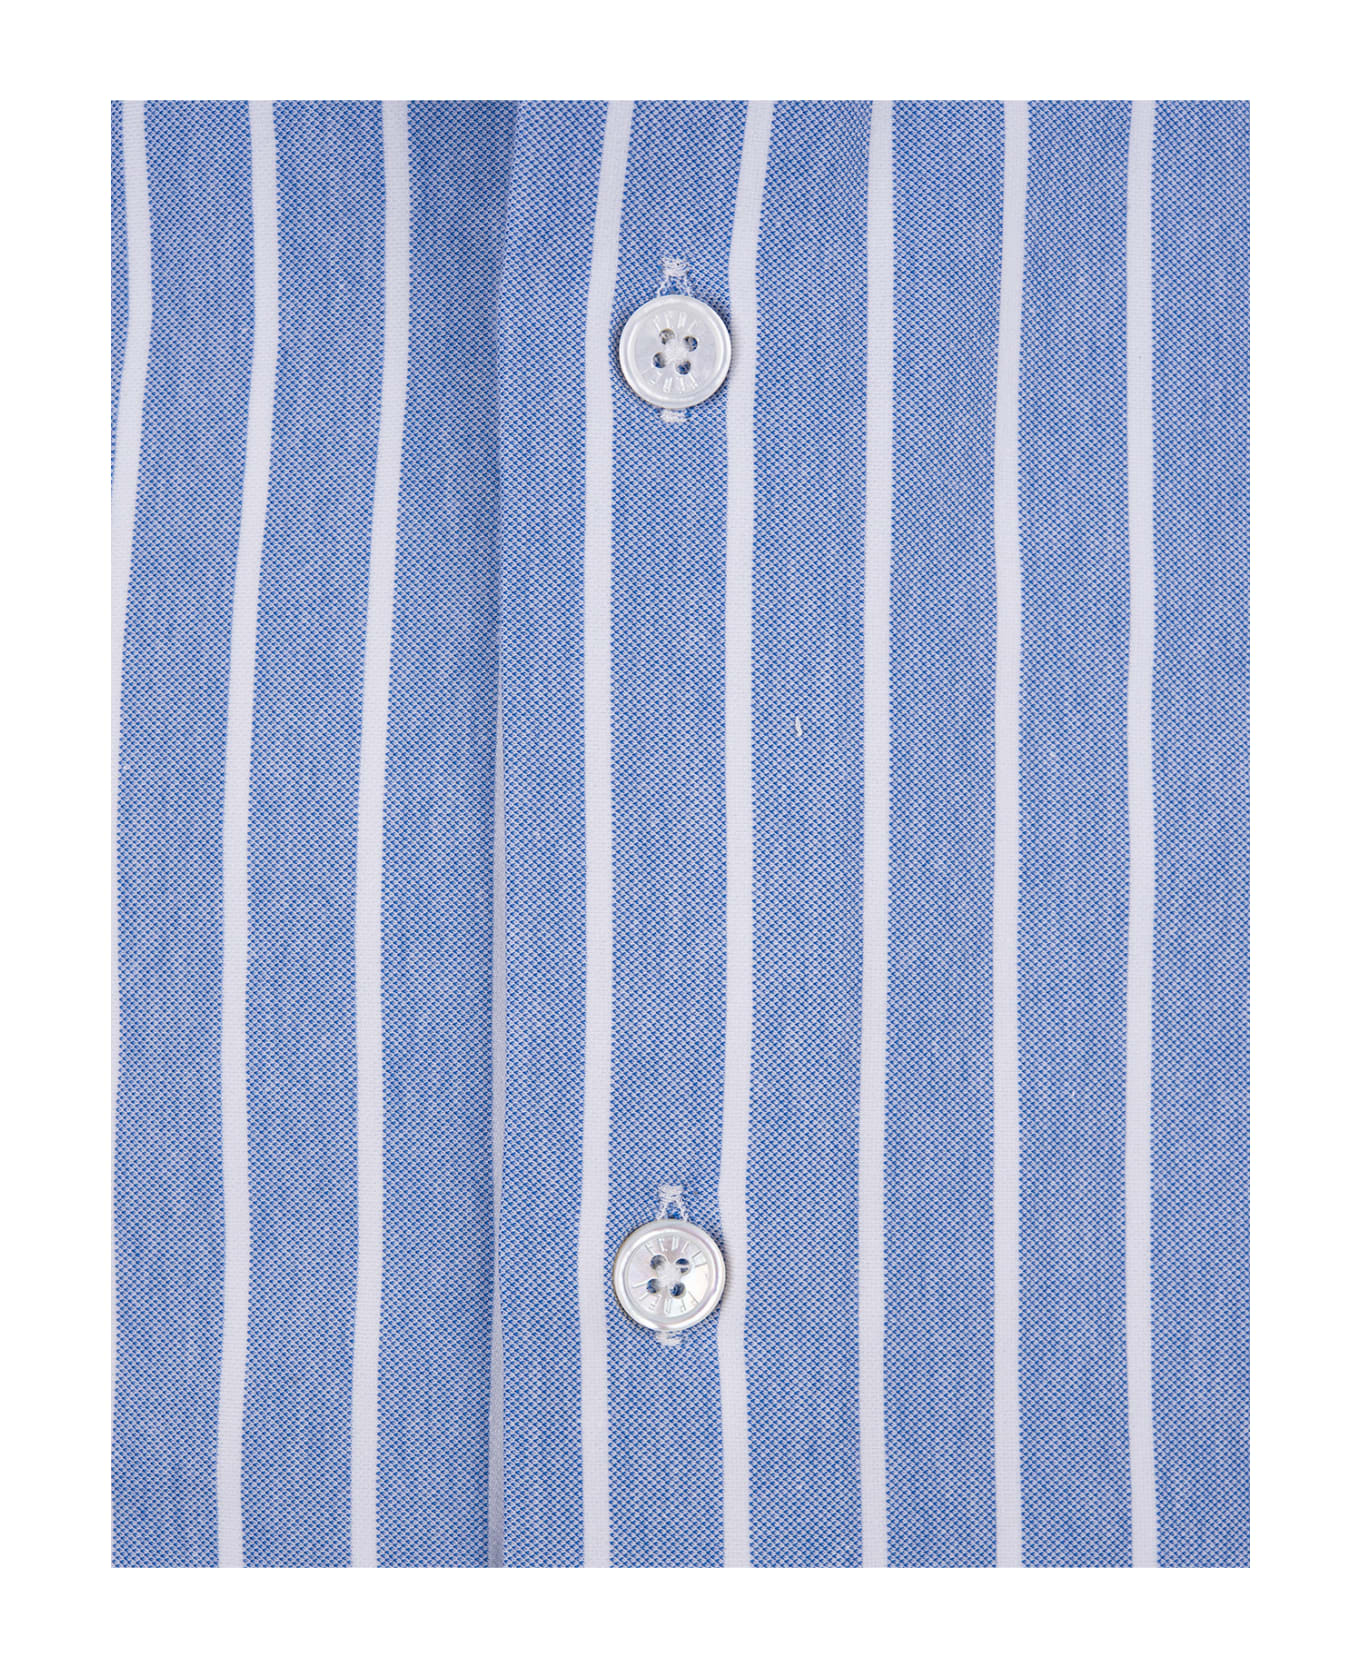 Fedeli Striped Blue Strech Shirt - Blue シャツ